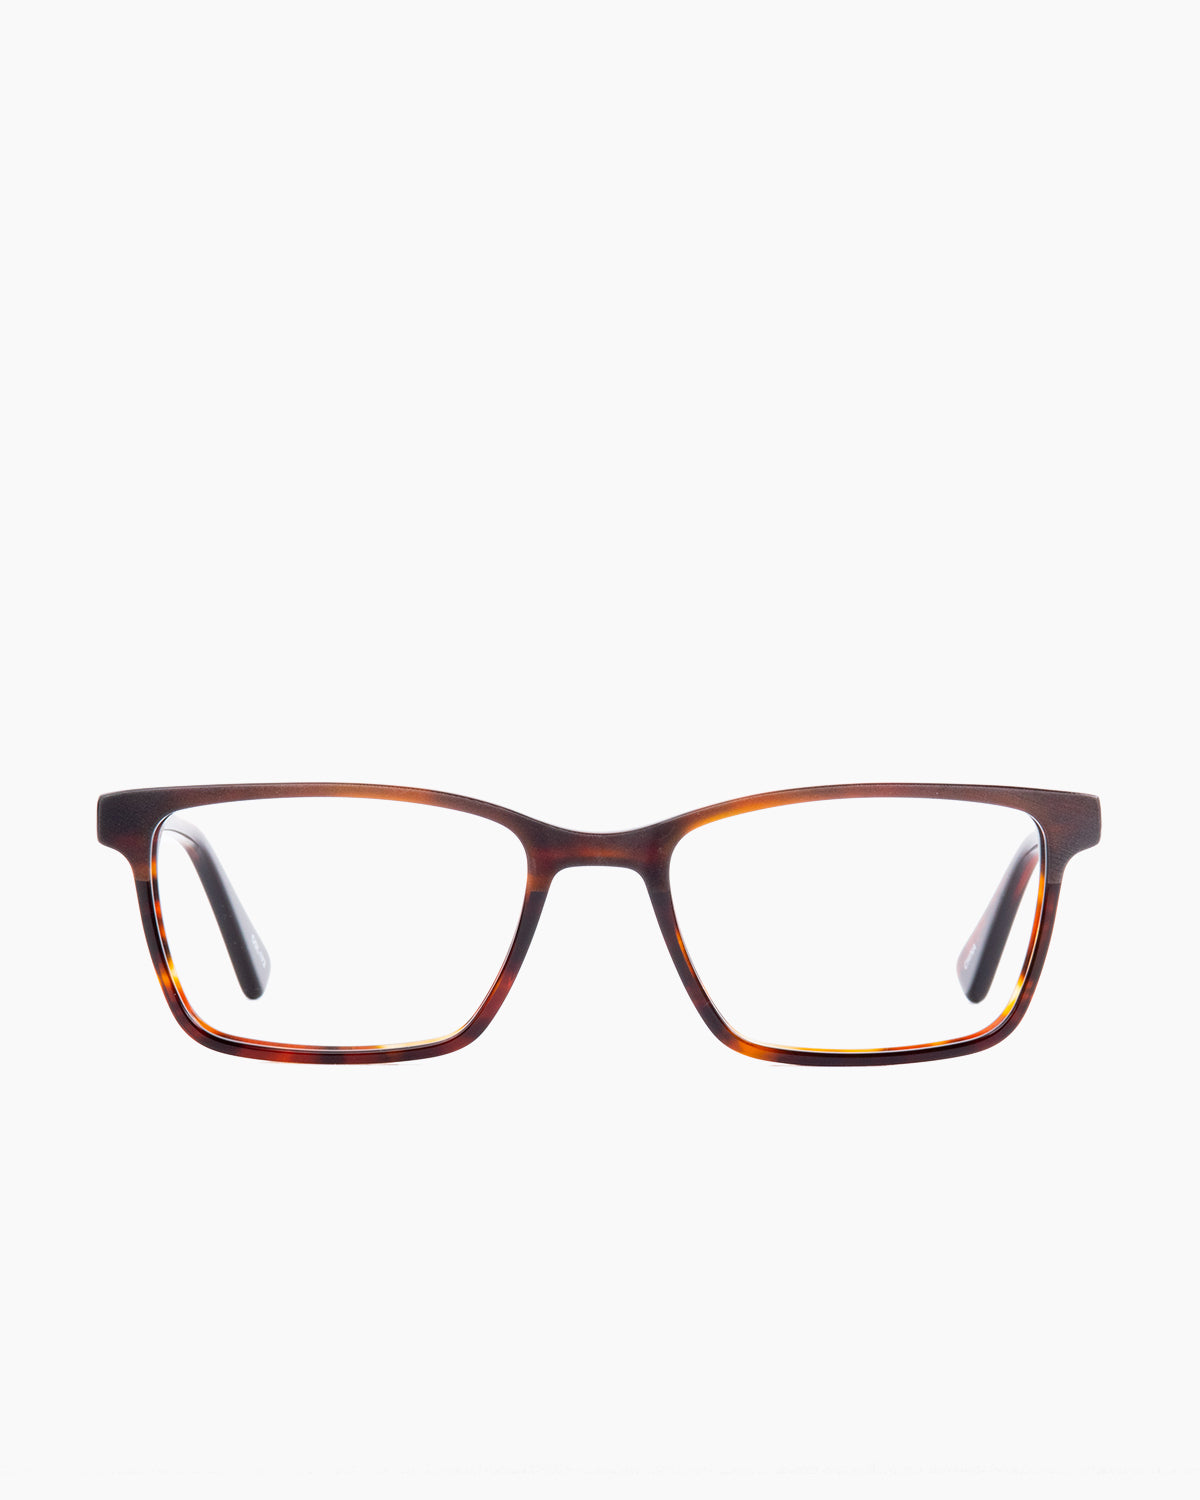 Evolve - Garfield - 172 | glasses bar